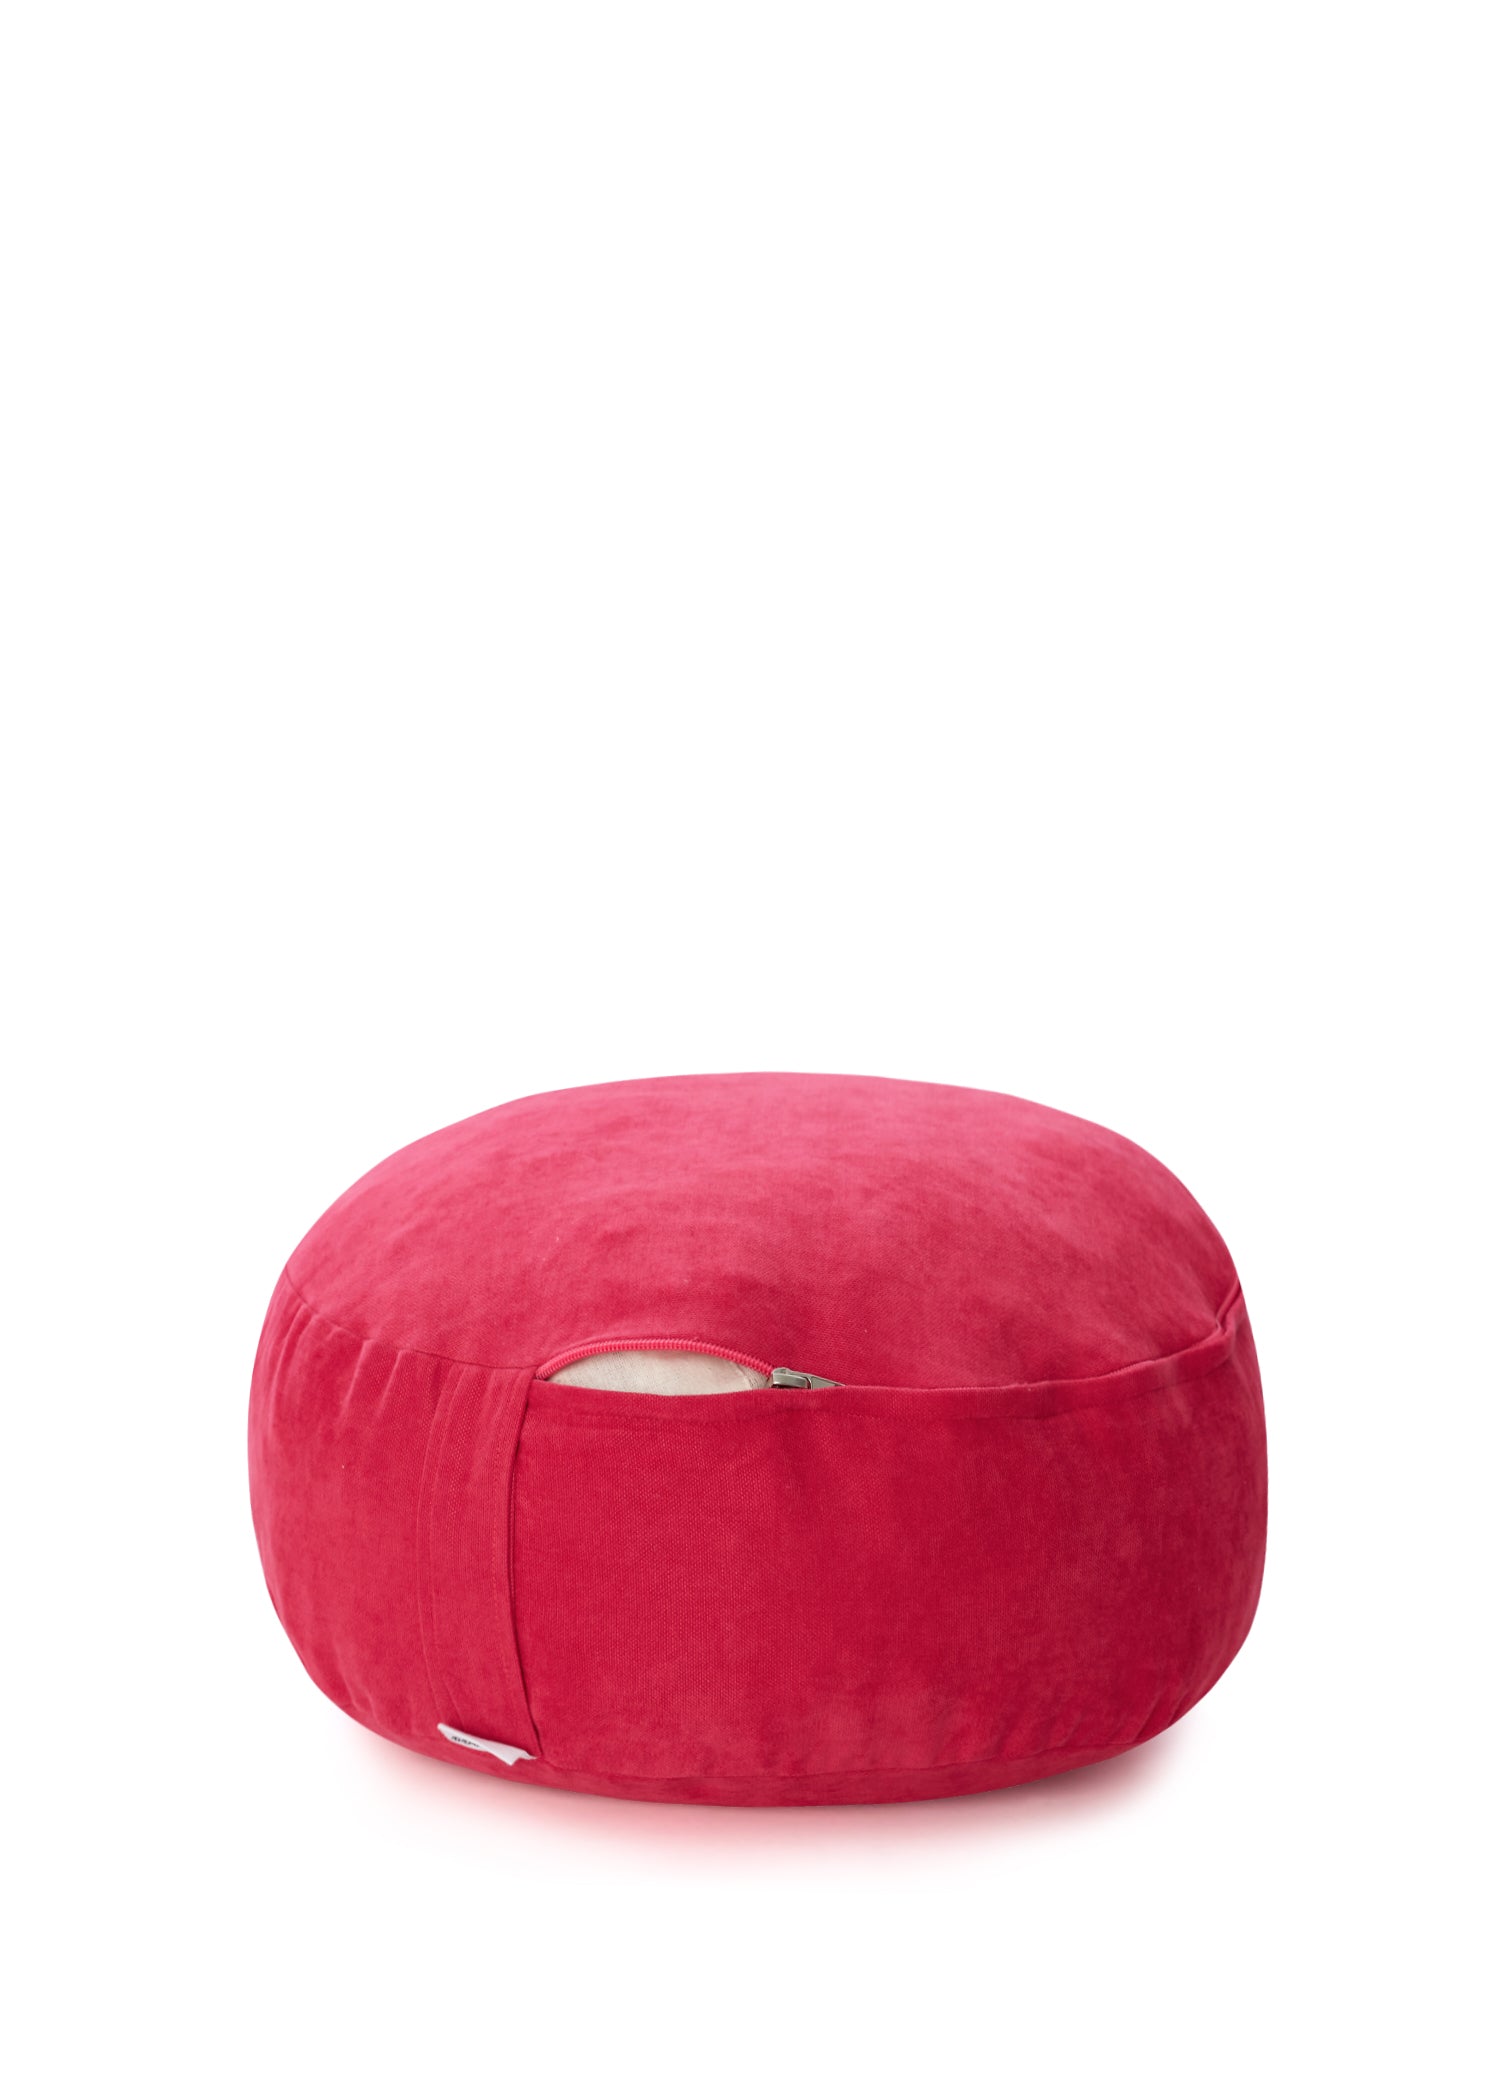 Pink Meditation Cushion 40 Cm Diameter